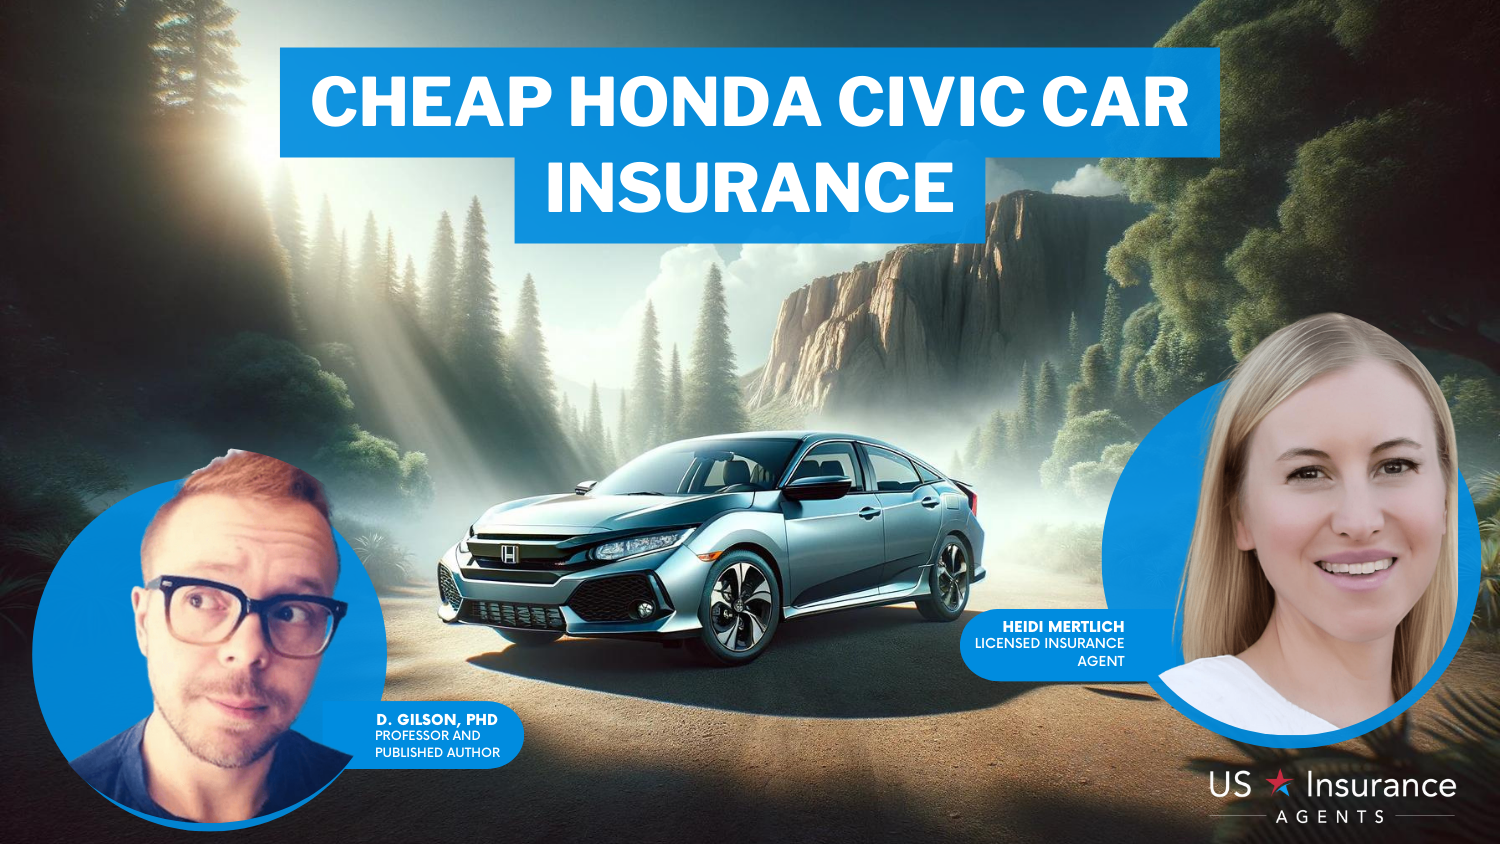 Cheap Honda Civic Car Insurance: State Farm, Progressive, and Liberty Mutual